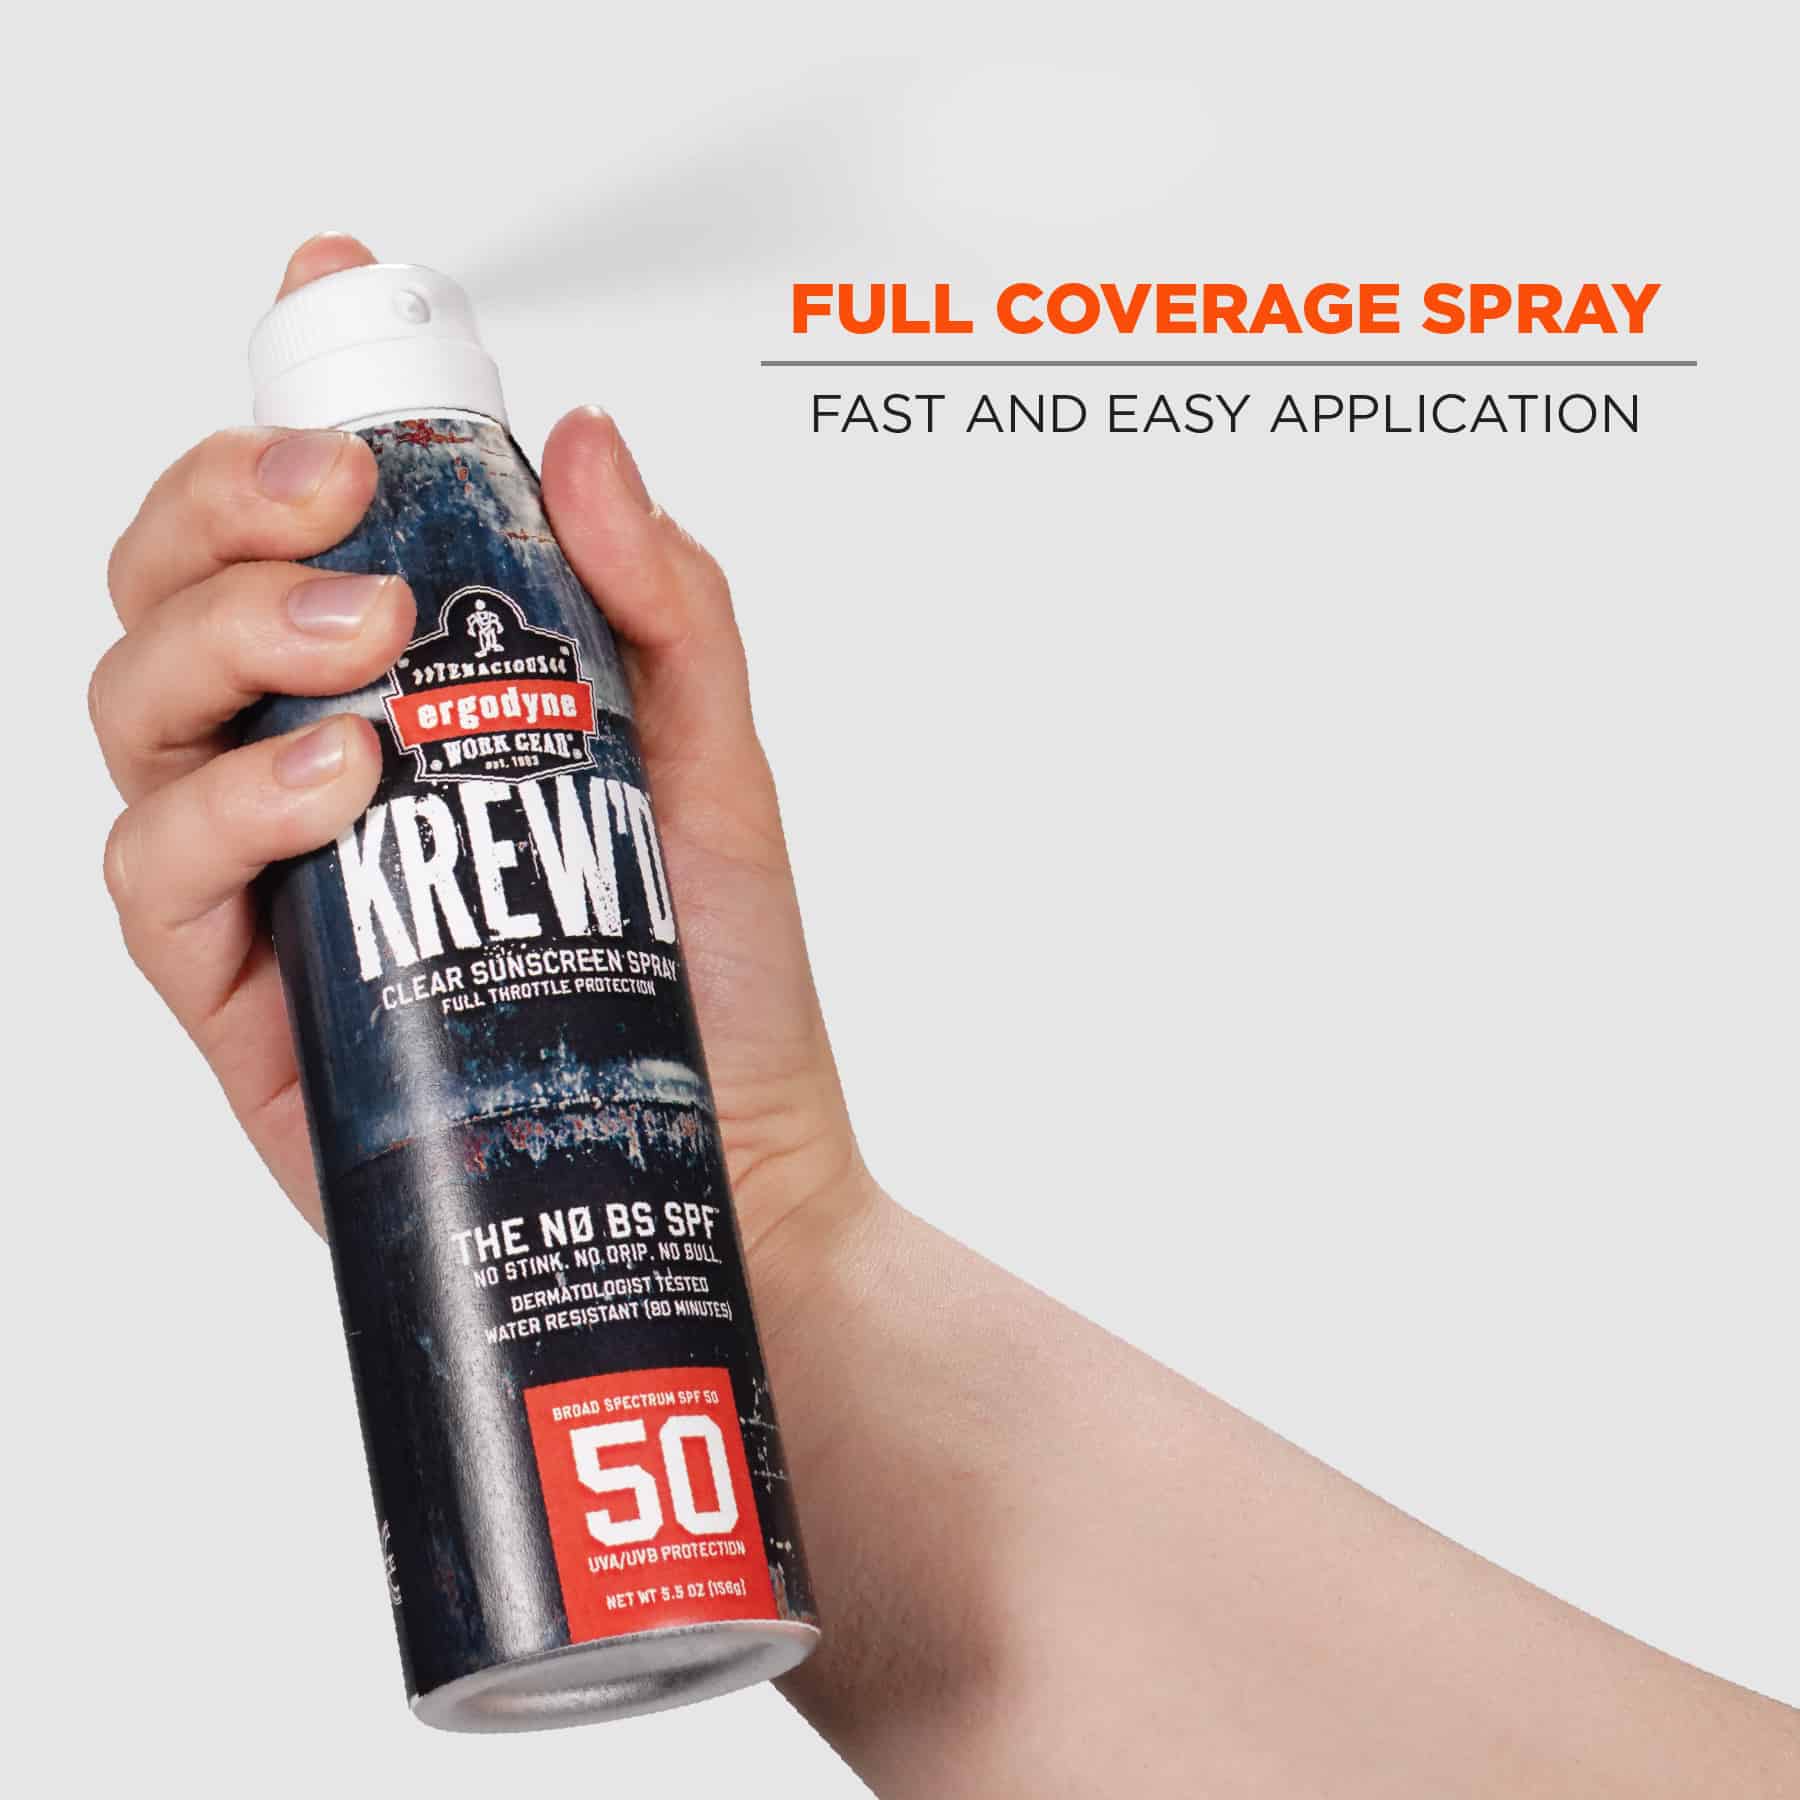 Ergodyne KREWD 5.5oz SPF 50 Sunscreen Spray from GME Supply